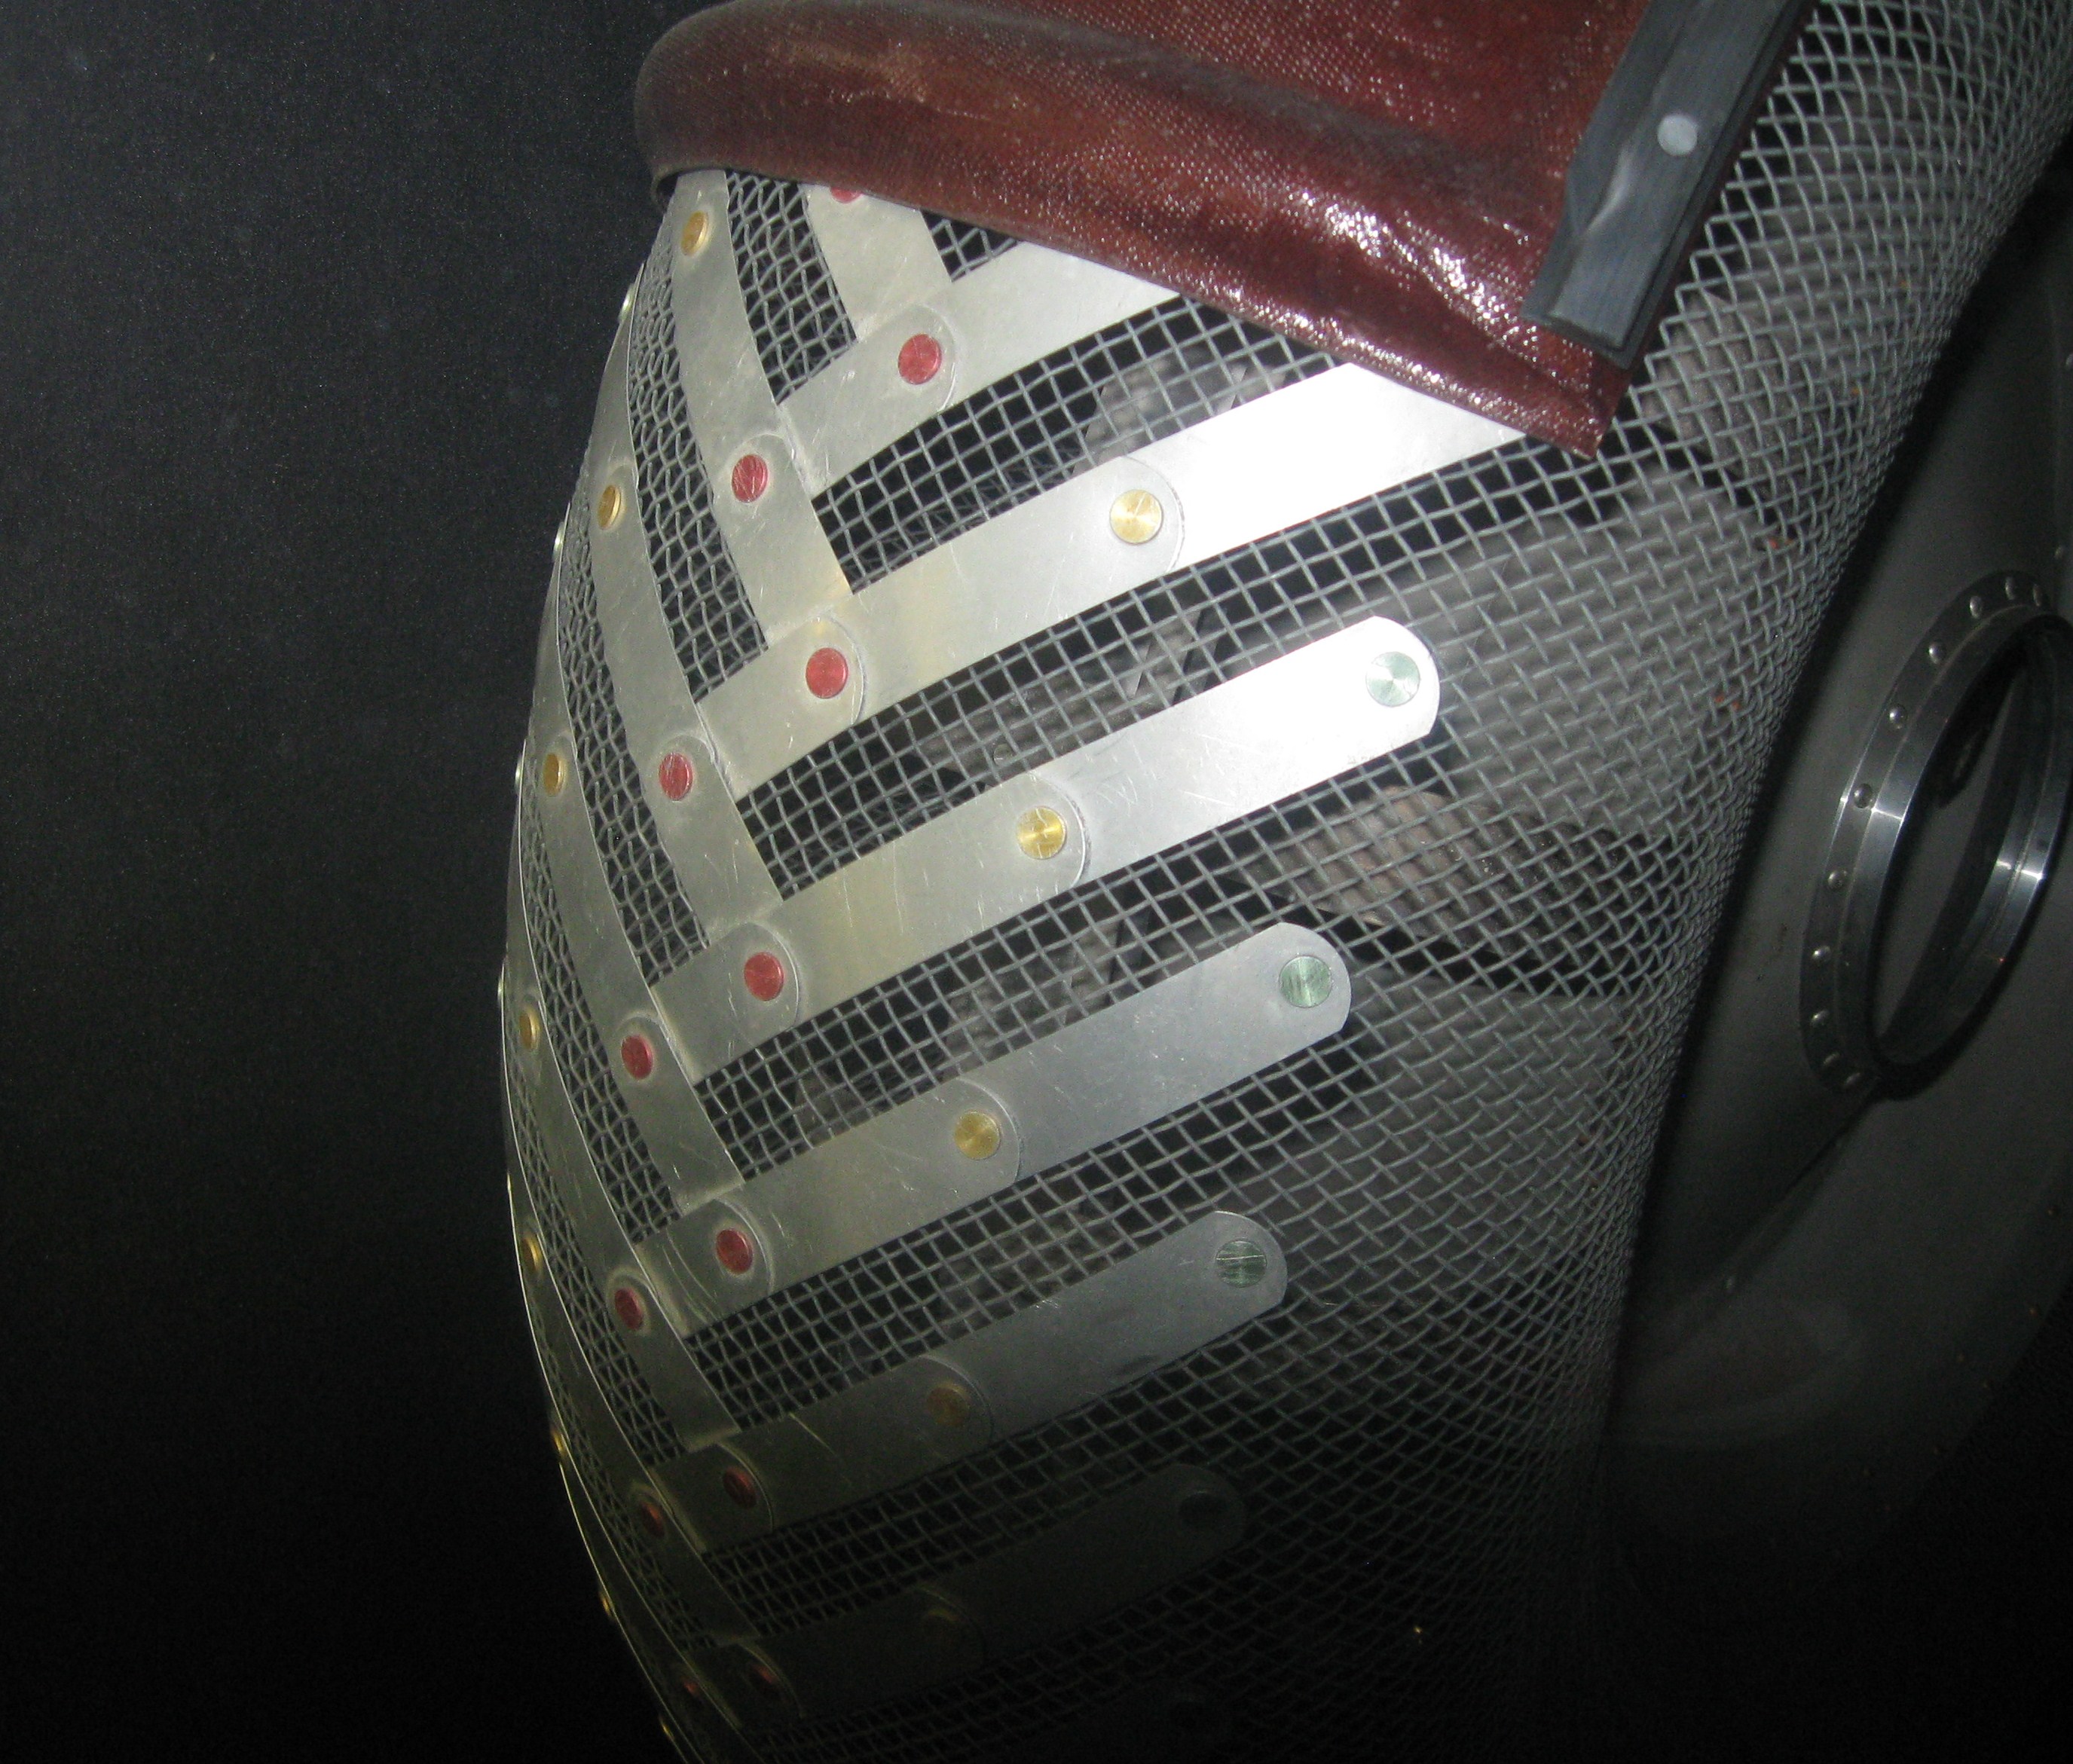 Lunar Roving Vehicle wheel close-up